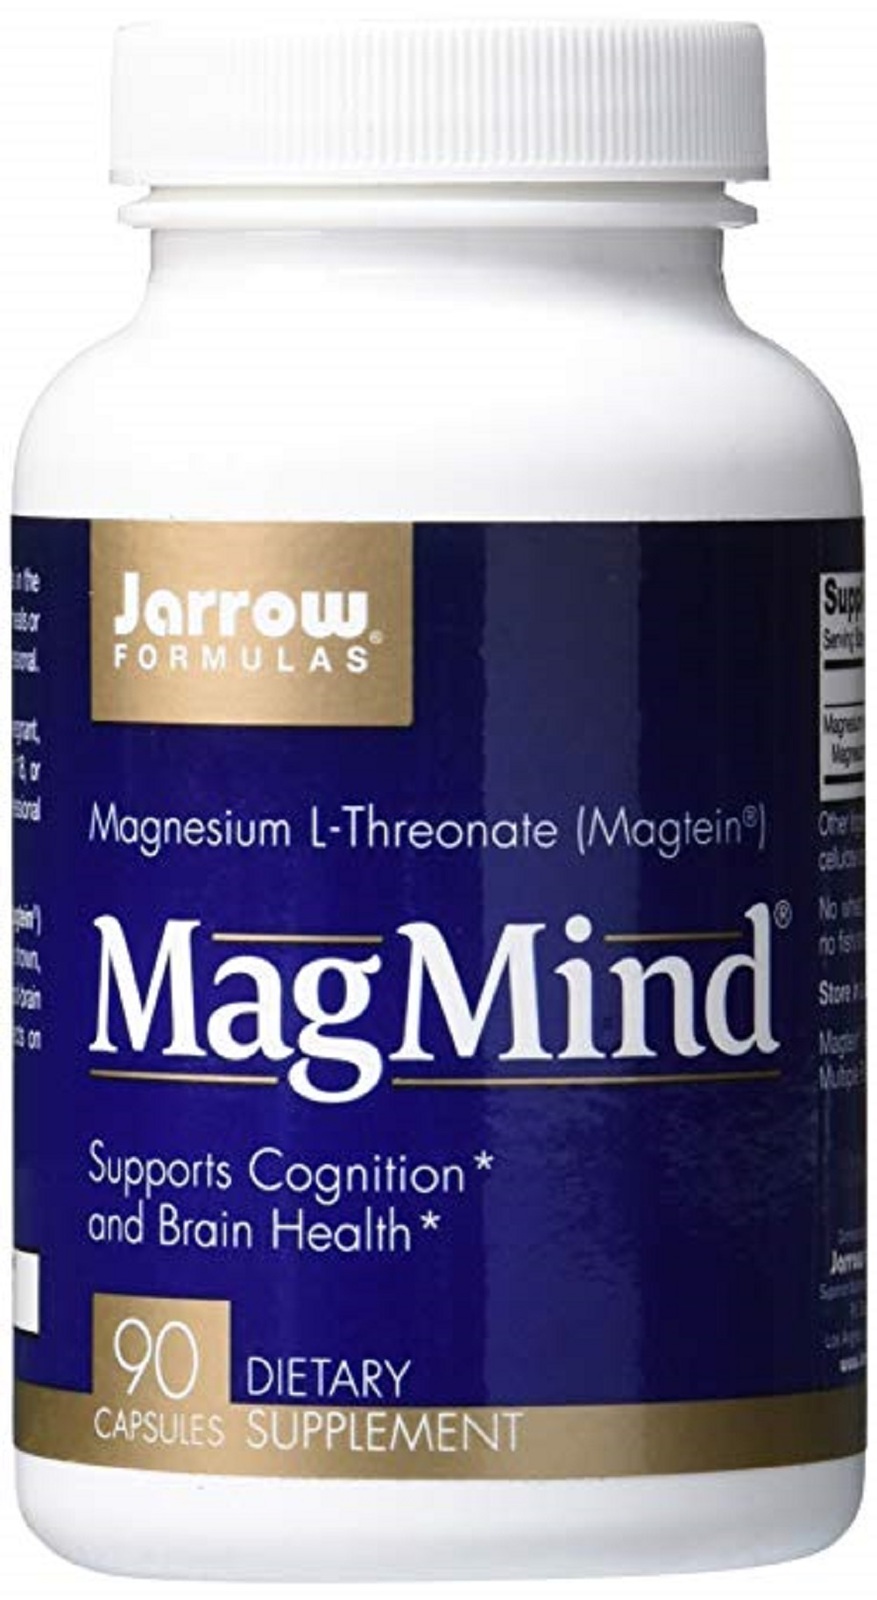 Jarrow Formulas Magmind, Supports Cognition, 90 Caps